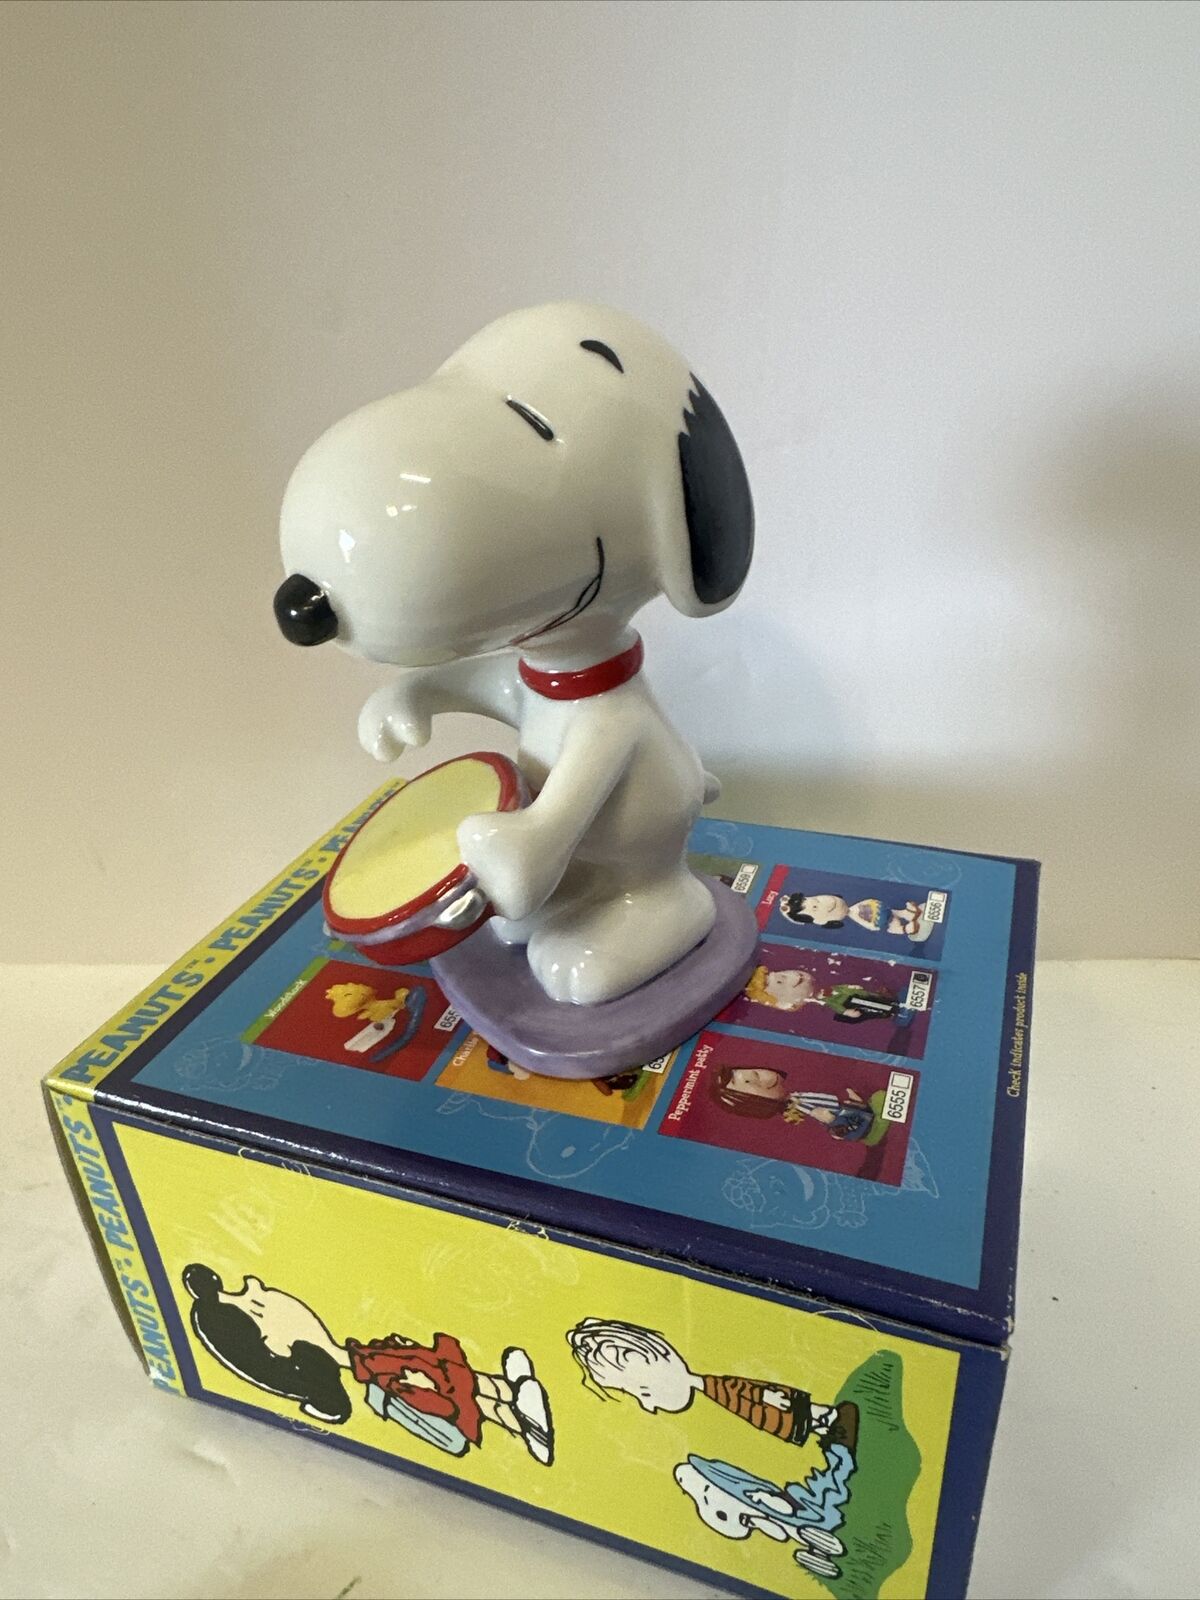 ‘98 Flambro Peanuts Snoopy Porcelain Figurine W/ TAMBOURINE 6552 W/ Original Box